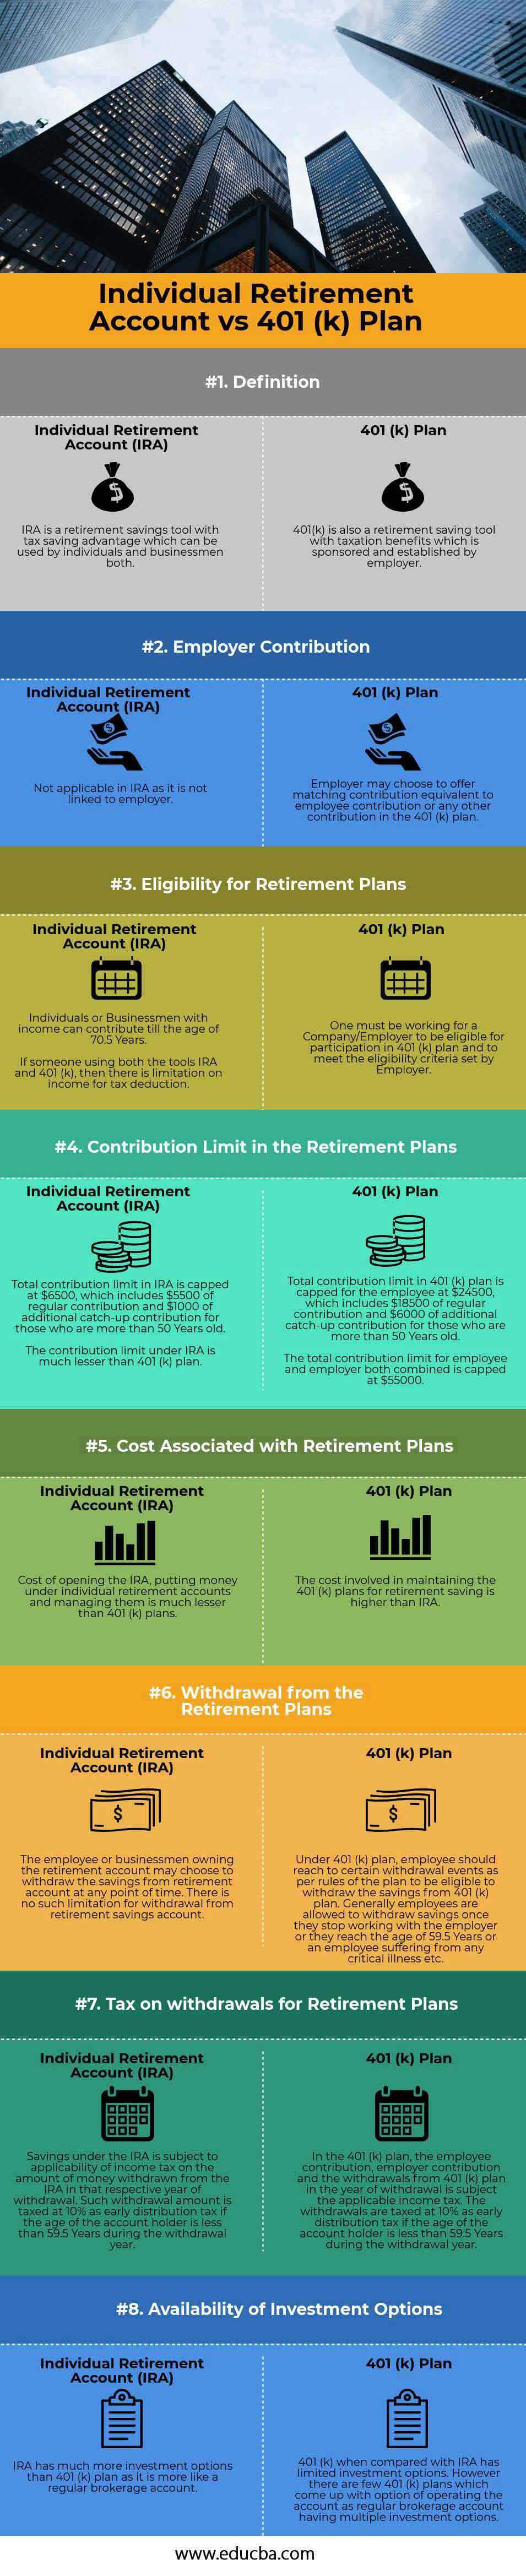 Individual-Retirement-Account-vs-401-(k)-Plan-info